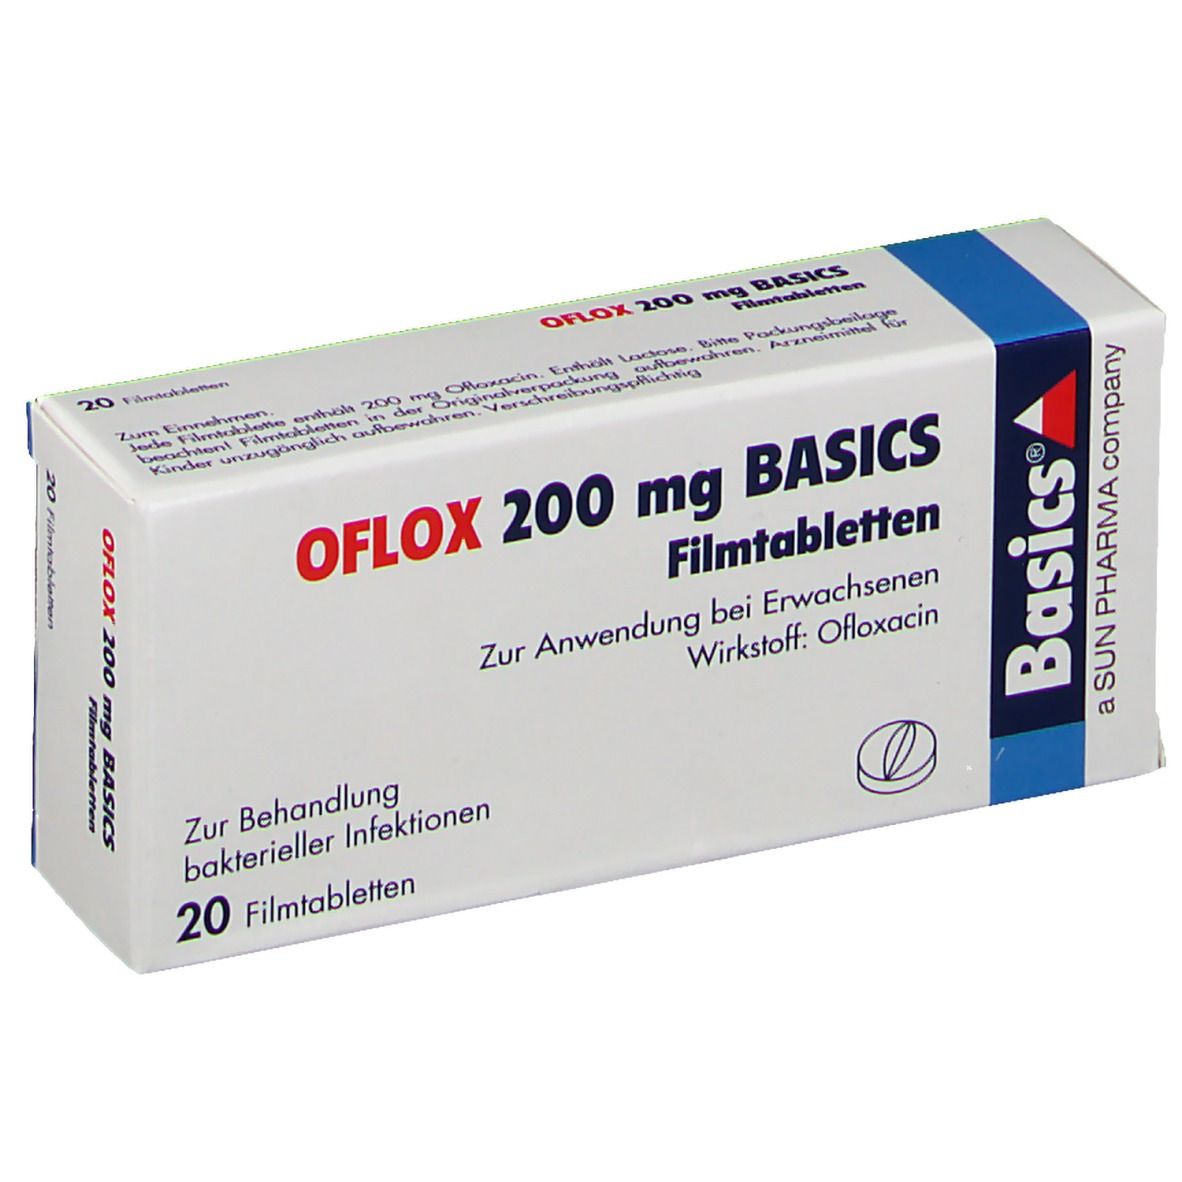 OFLOX 200 mg BASICS